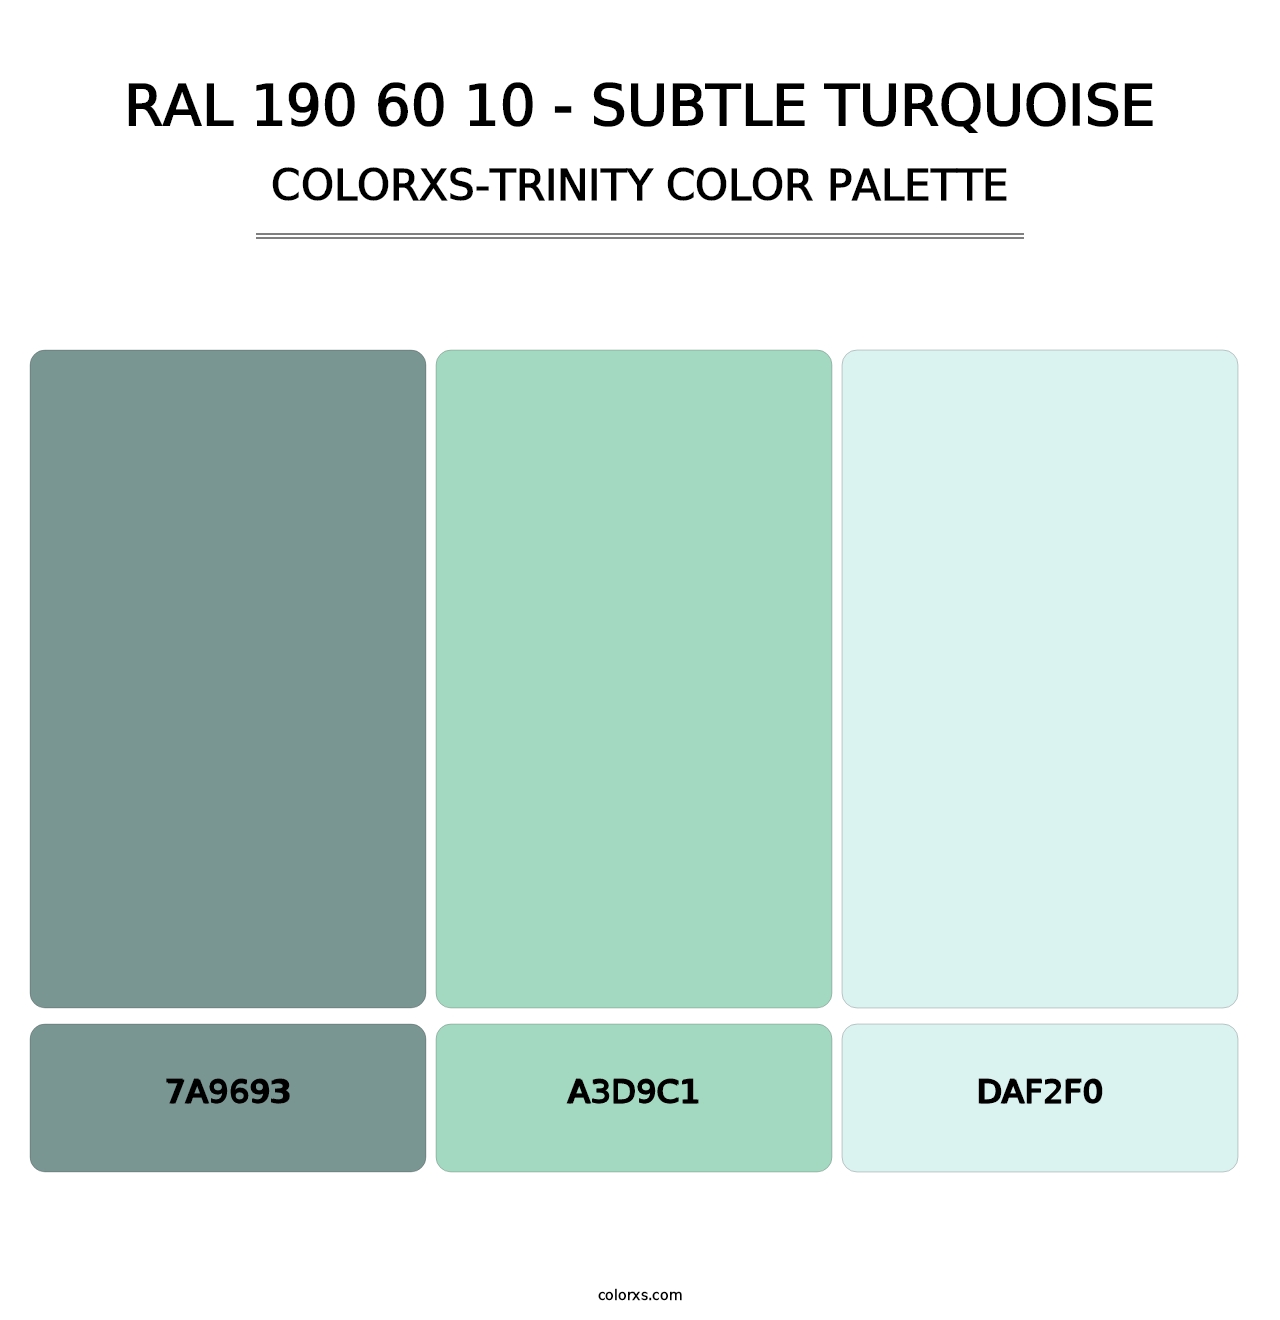 RAL 190 60 10 - Subtle Turquoise - Colorxs Trinity Palette